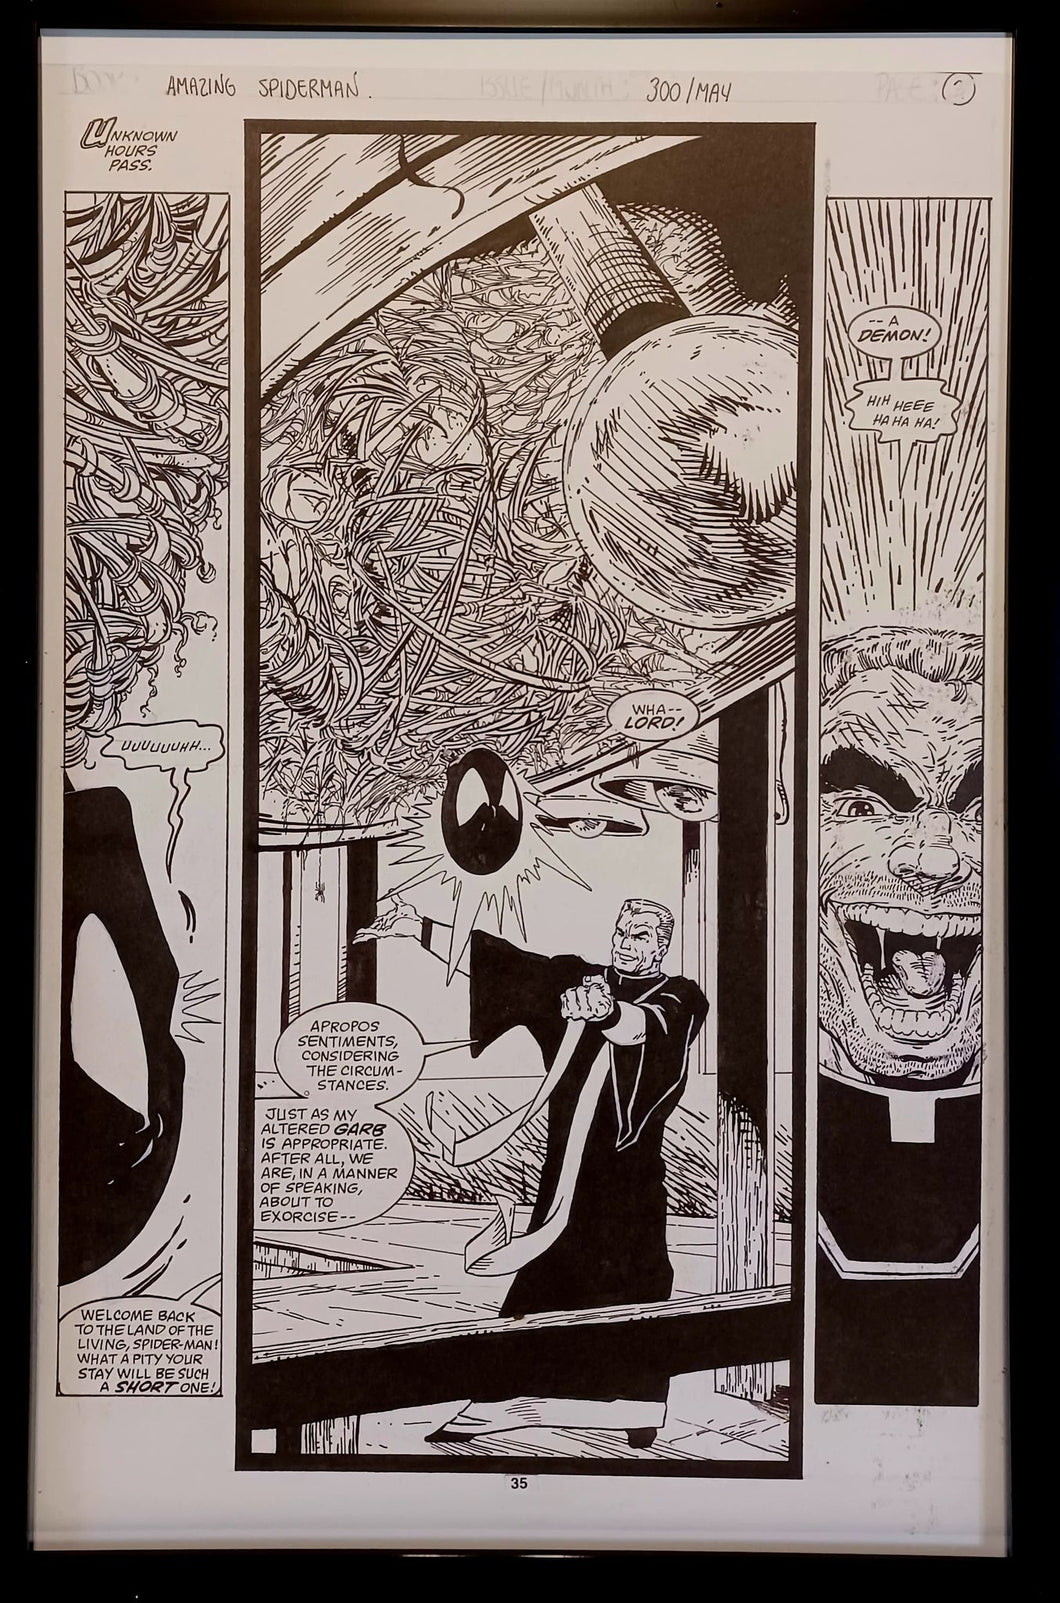 Amazing Spider-Man #300 pg. 31 by Todd McFarlane 11x17 FRAMED Original Art Print Comic Poster